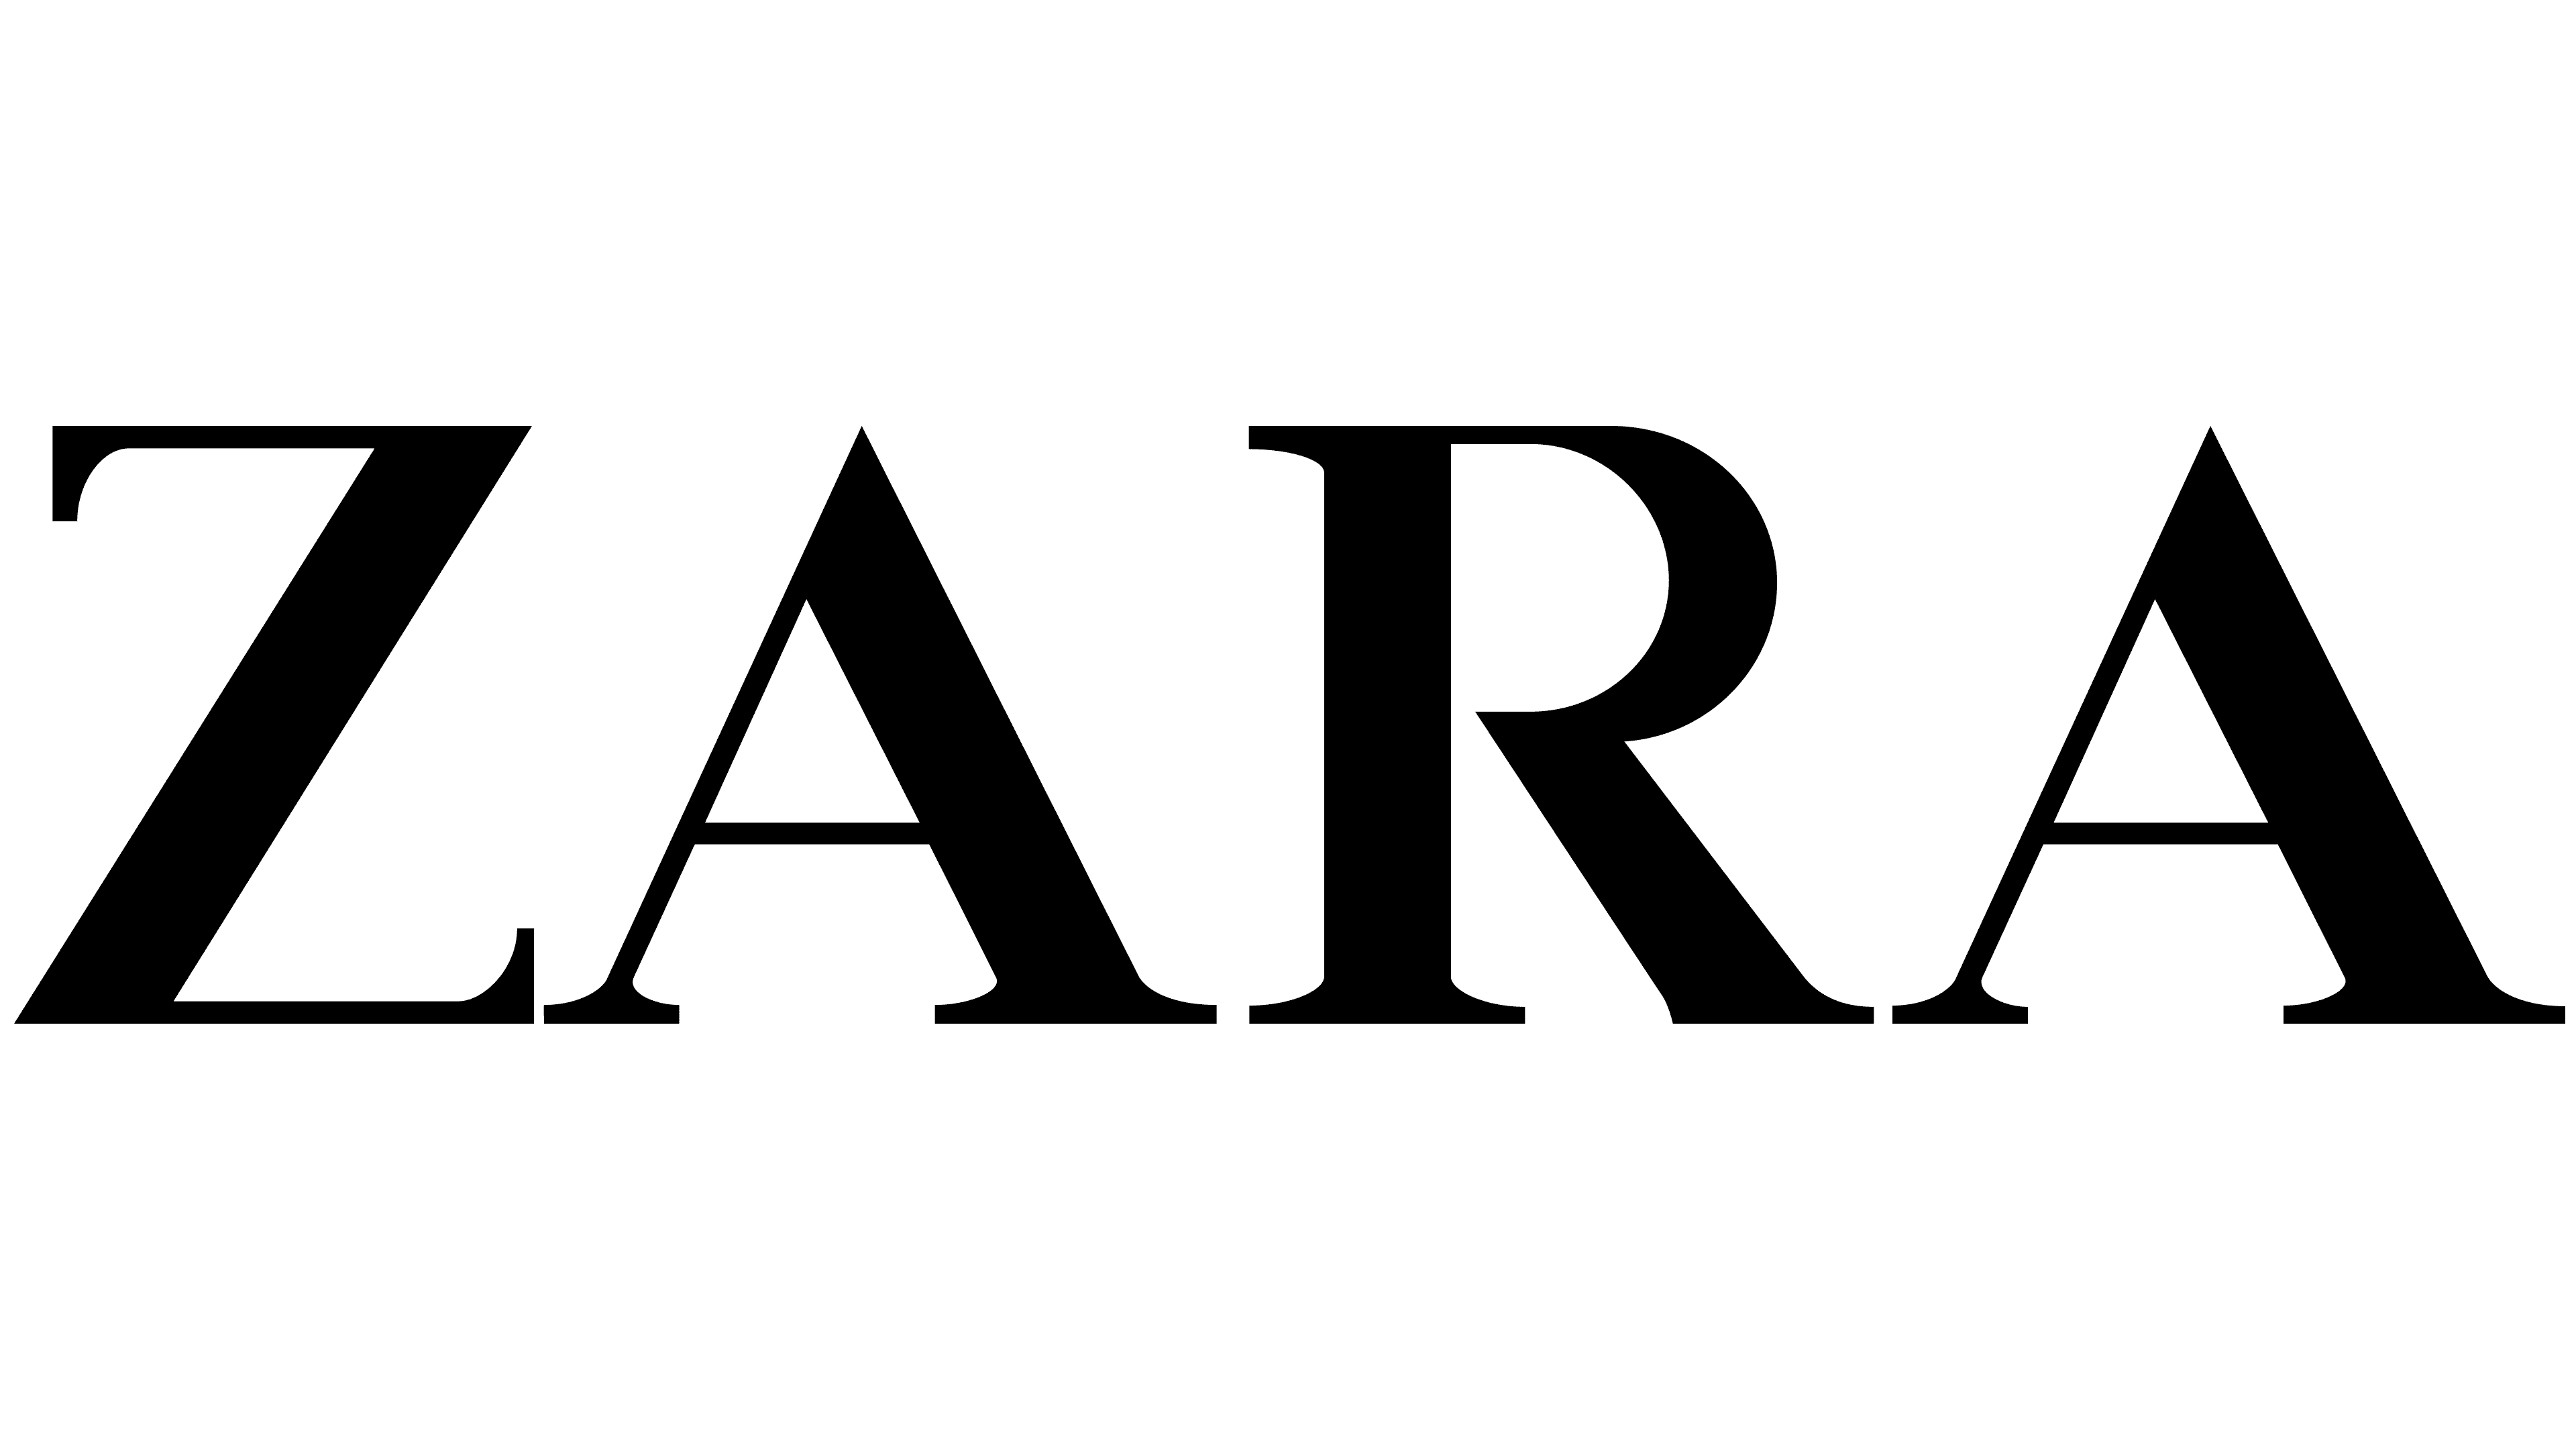 Zara Logo PNG Images Transparent Free Download | PNGMart